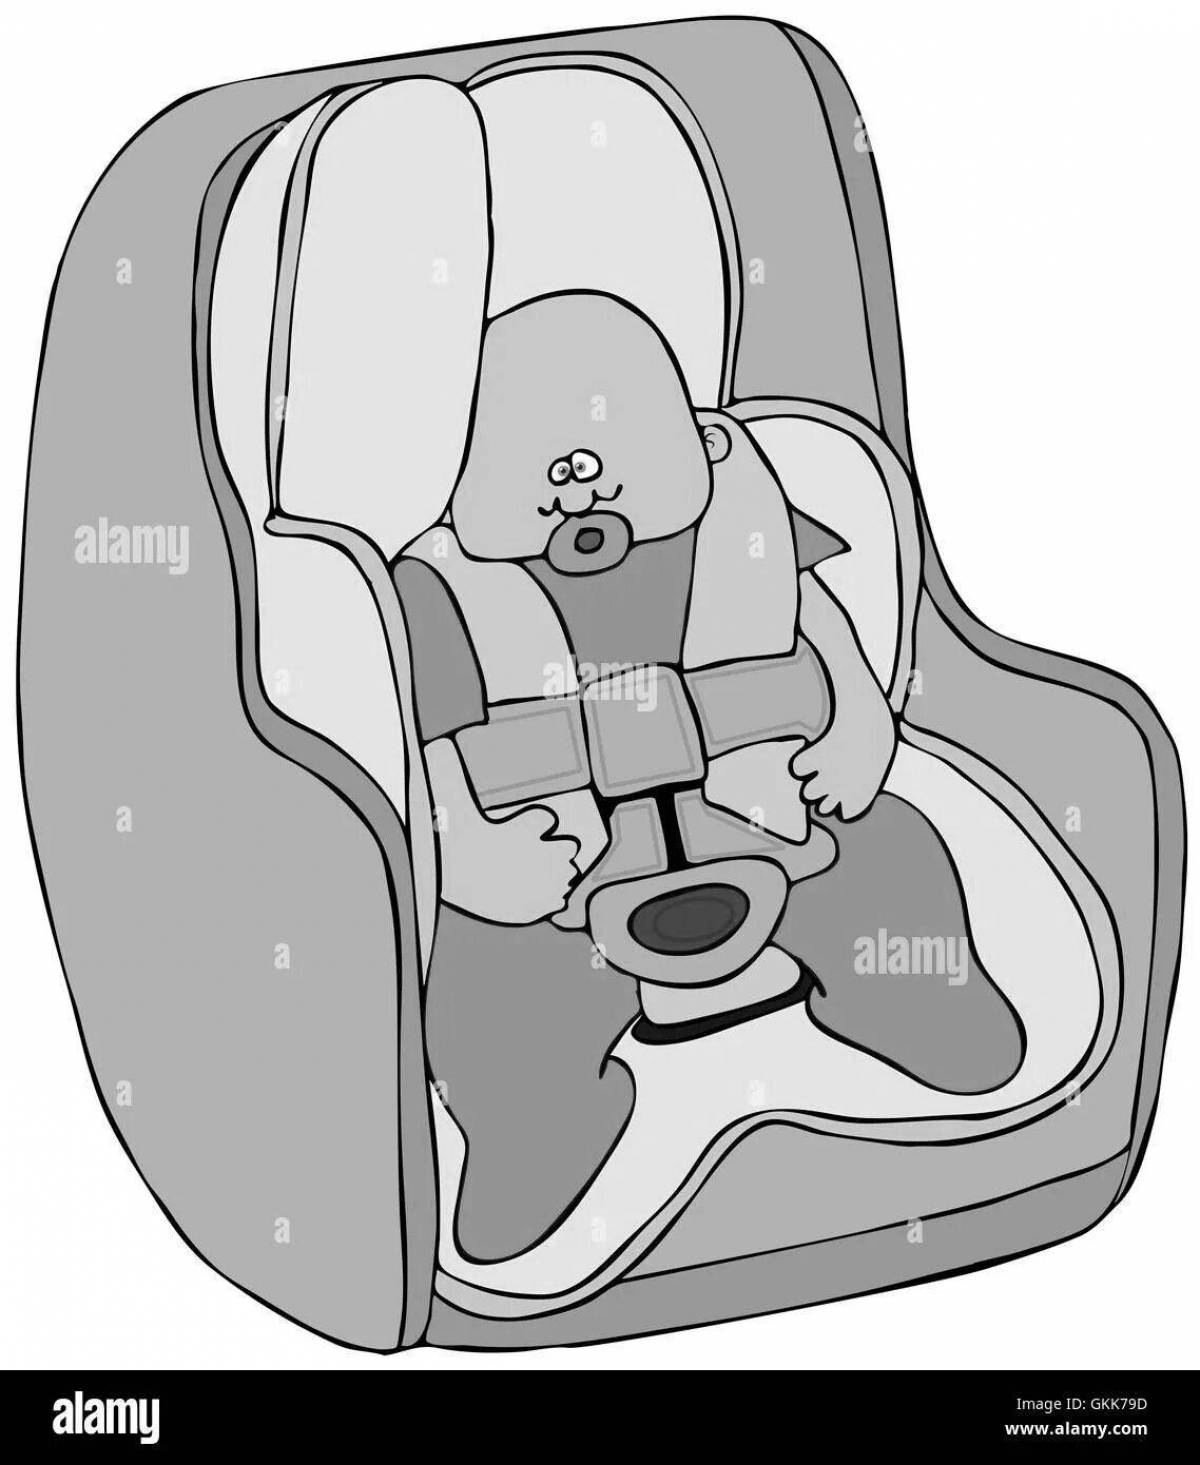 Brilliant car seat coloring page